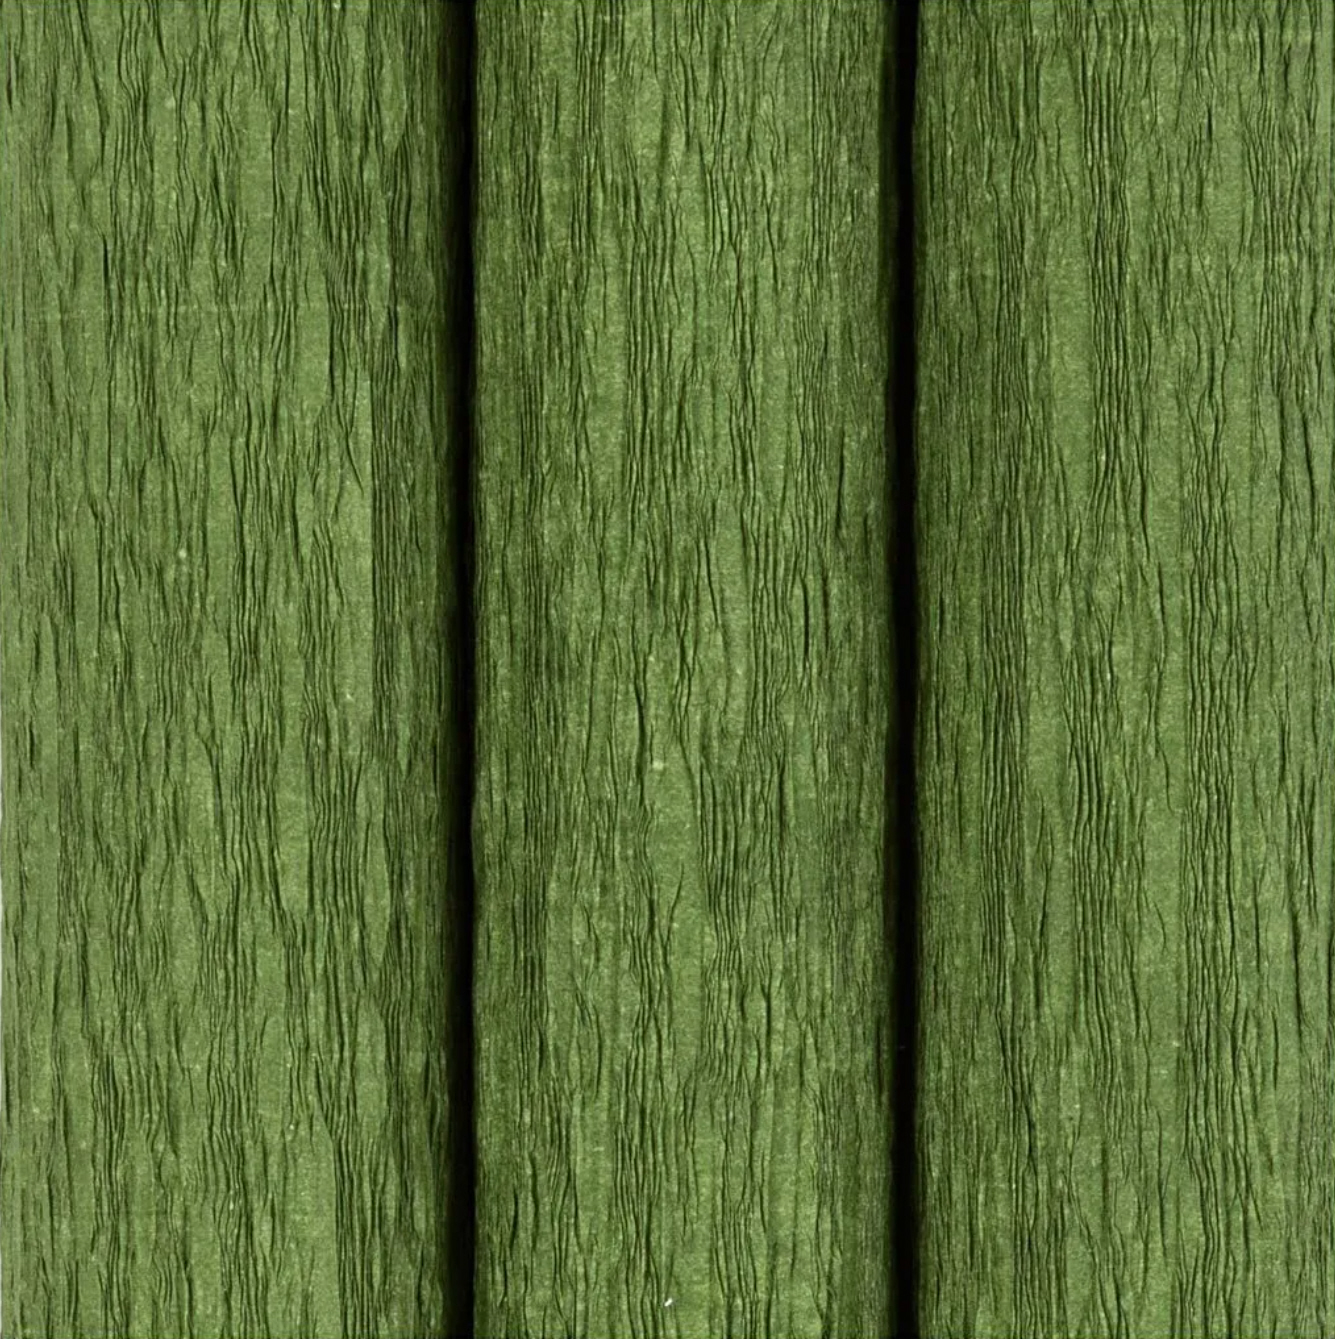 Krepppapier dunkelgrün